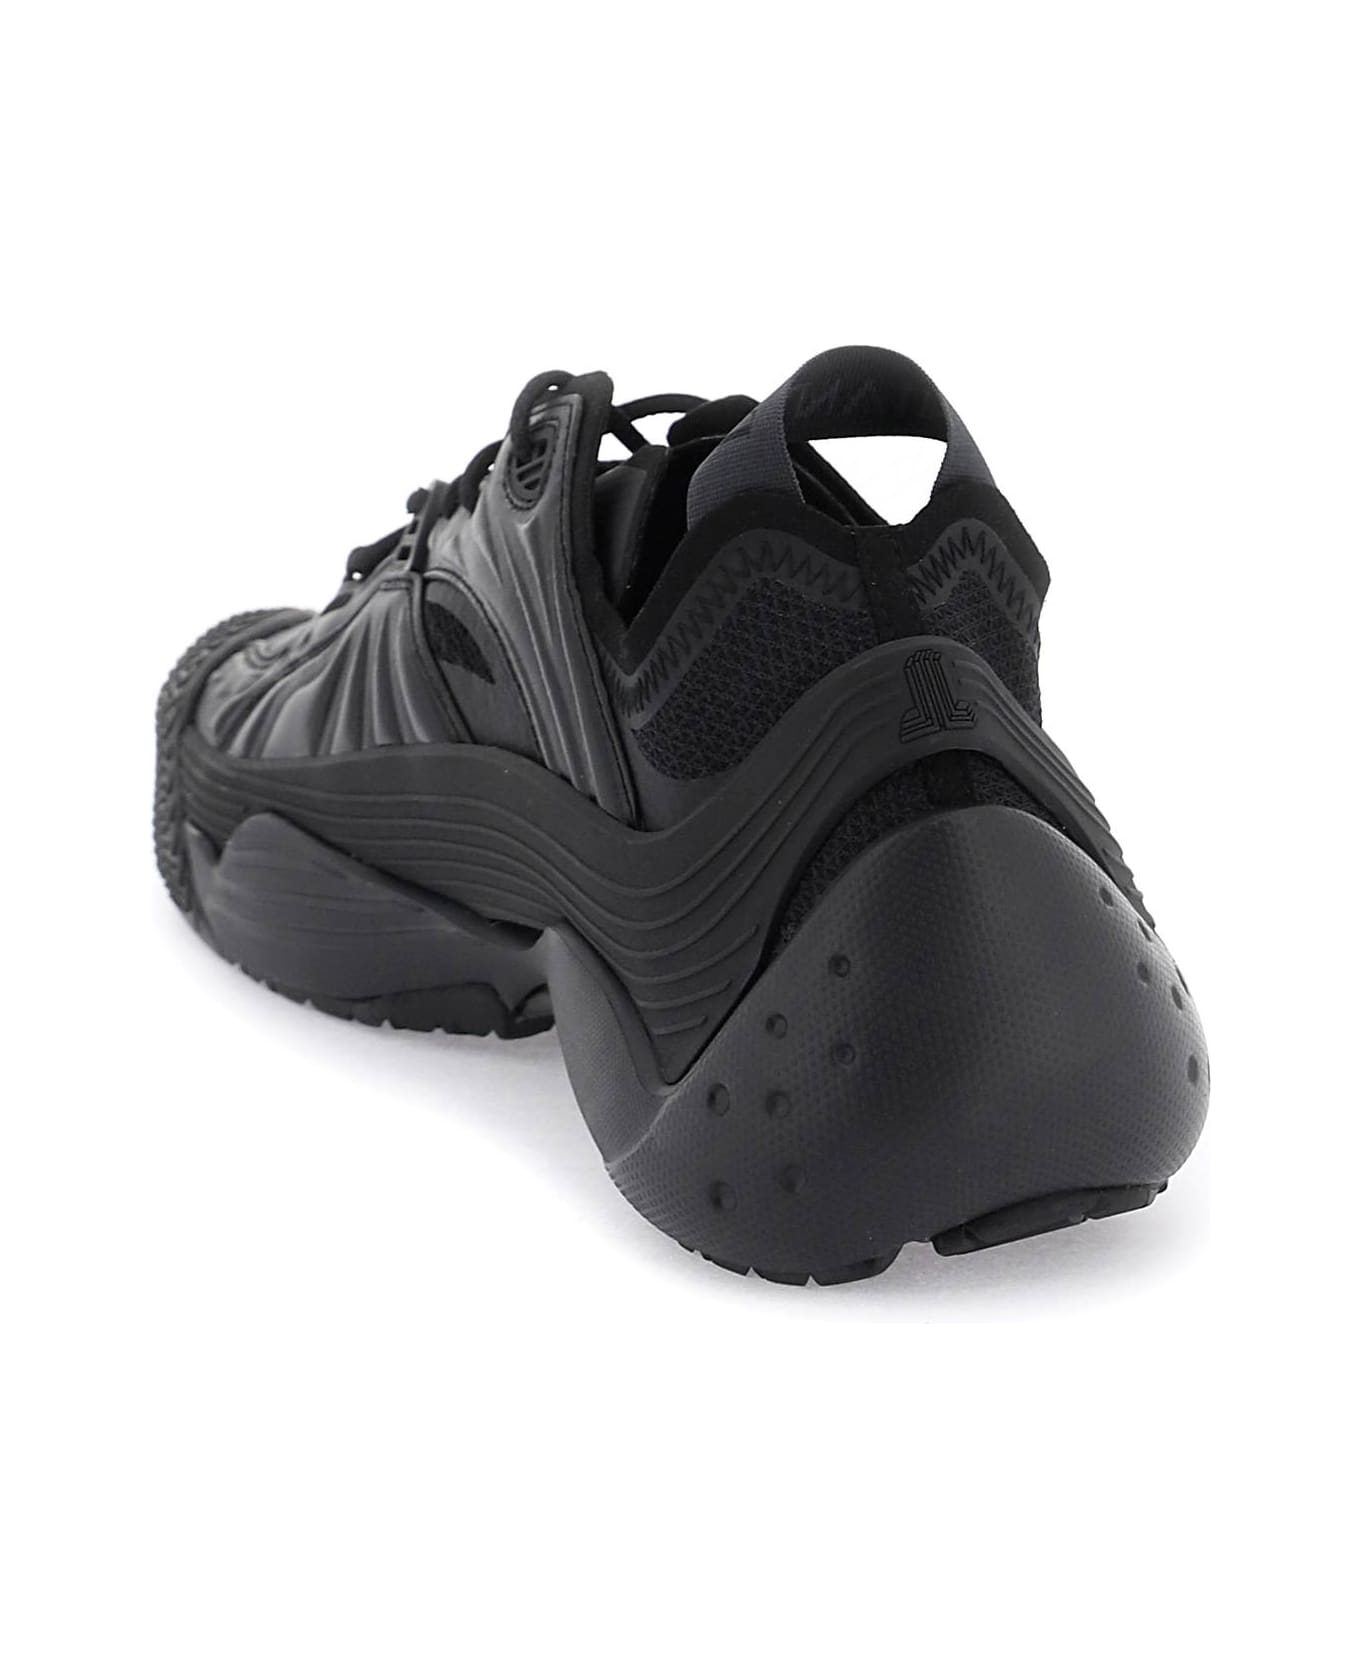 Lanvin Sneakers - BLACK (Black)